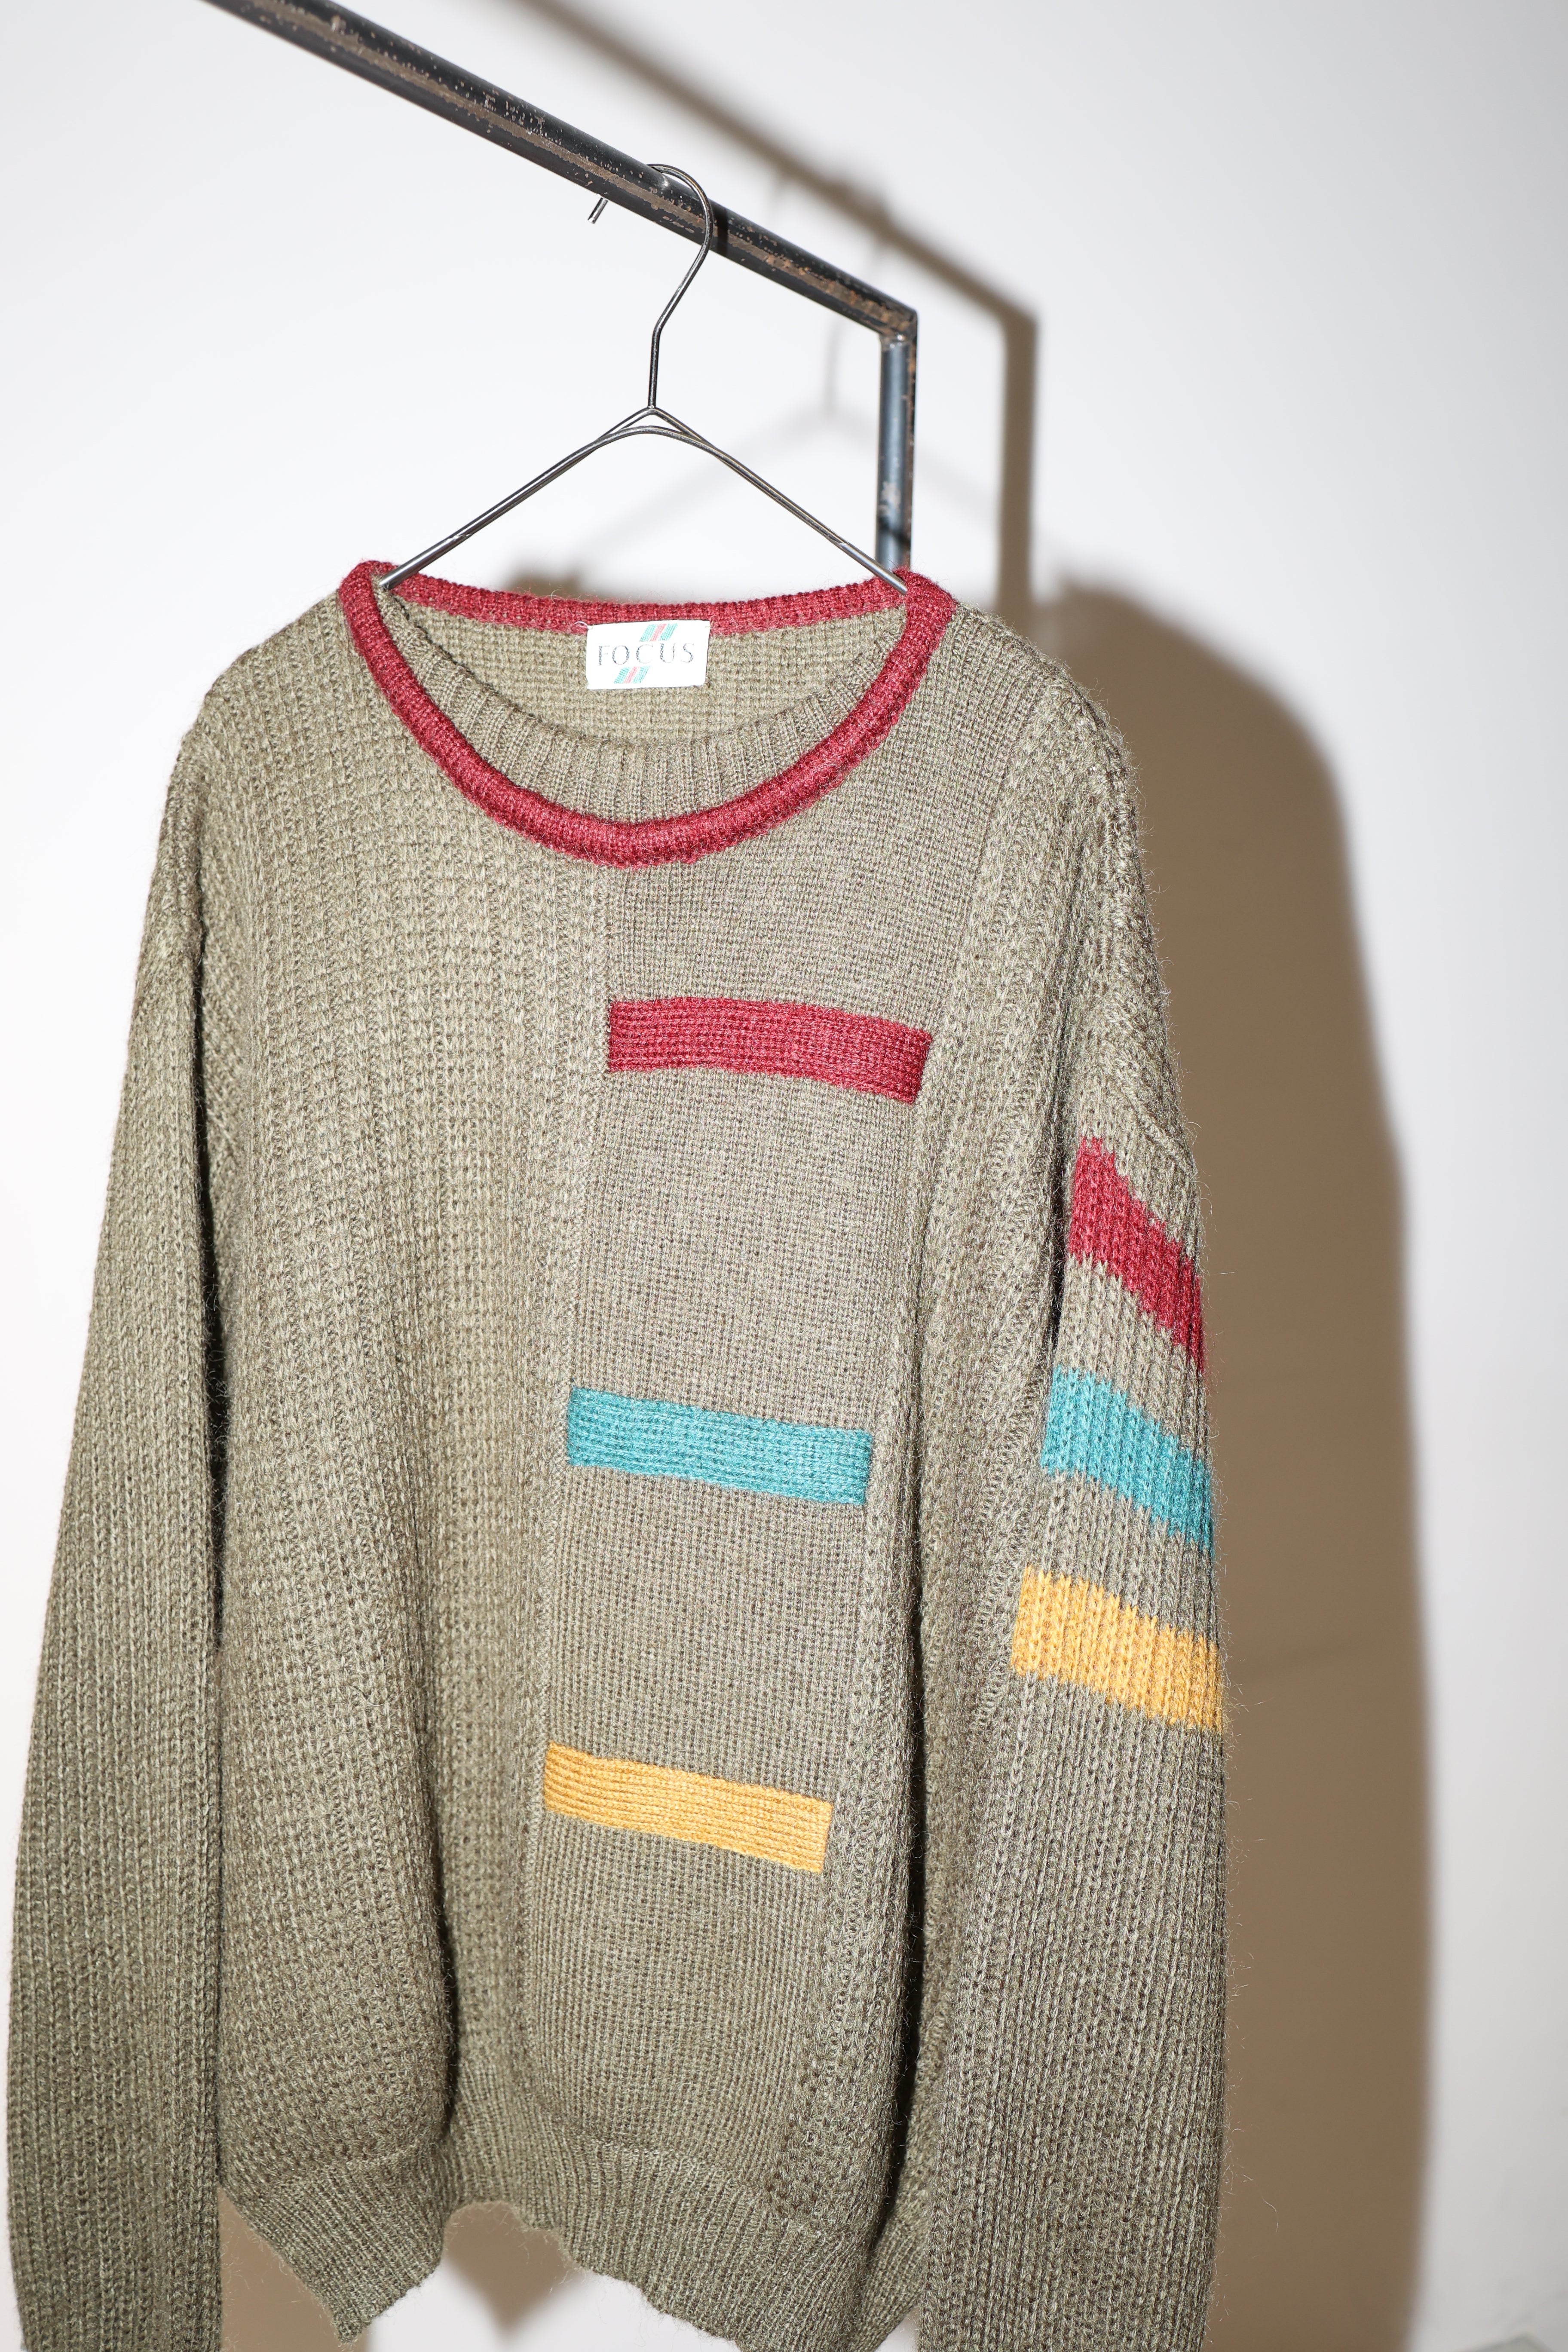 80's  wool/acrylic knit sweater